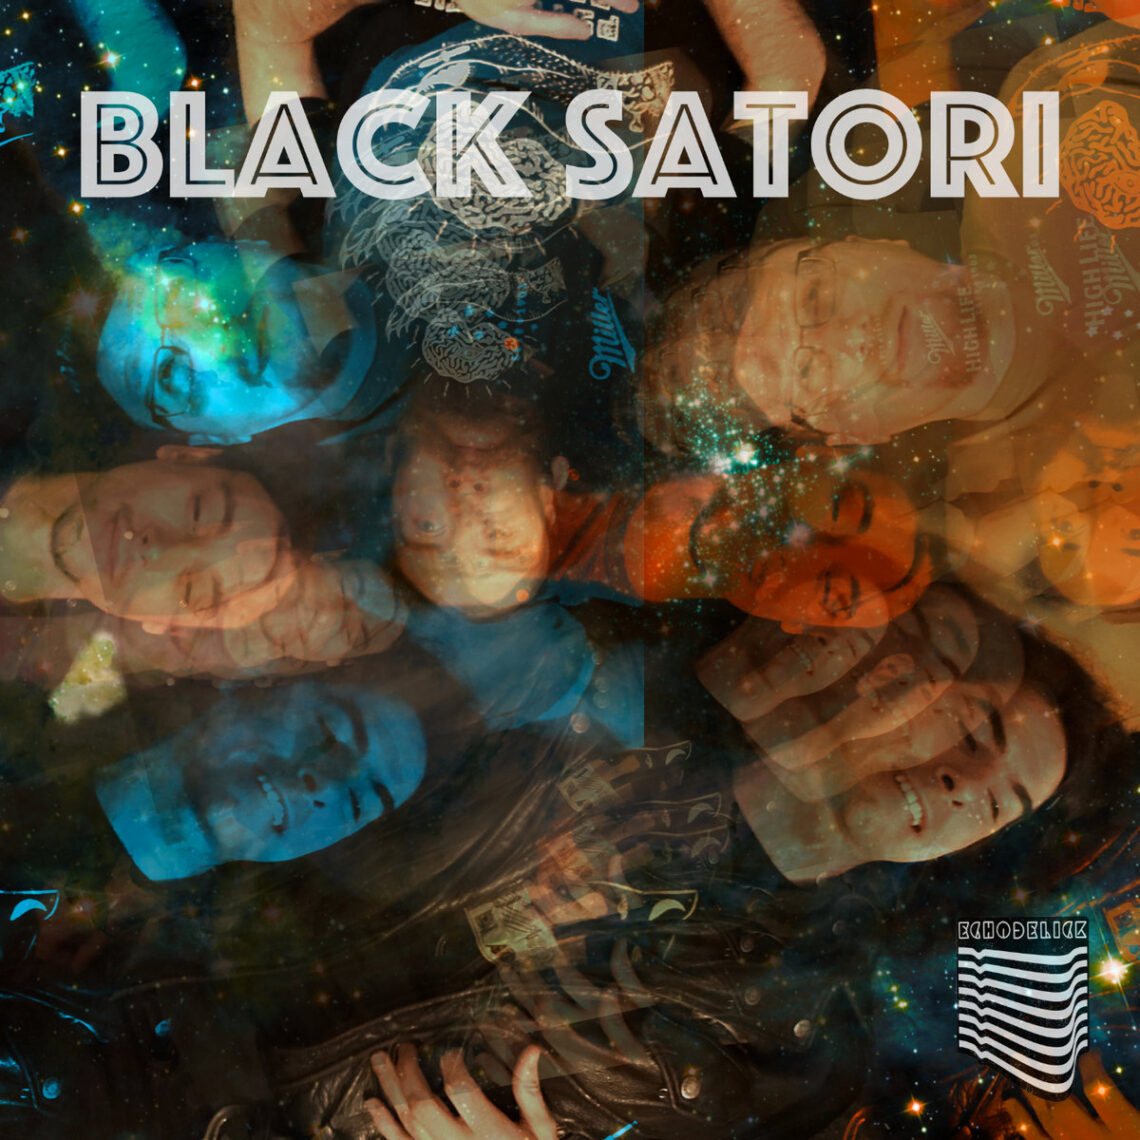 Black Satori has released a new 7" single